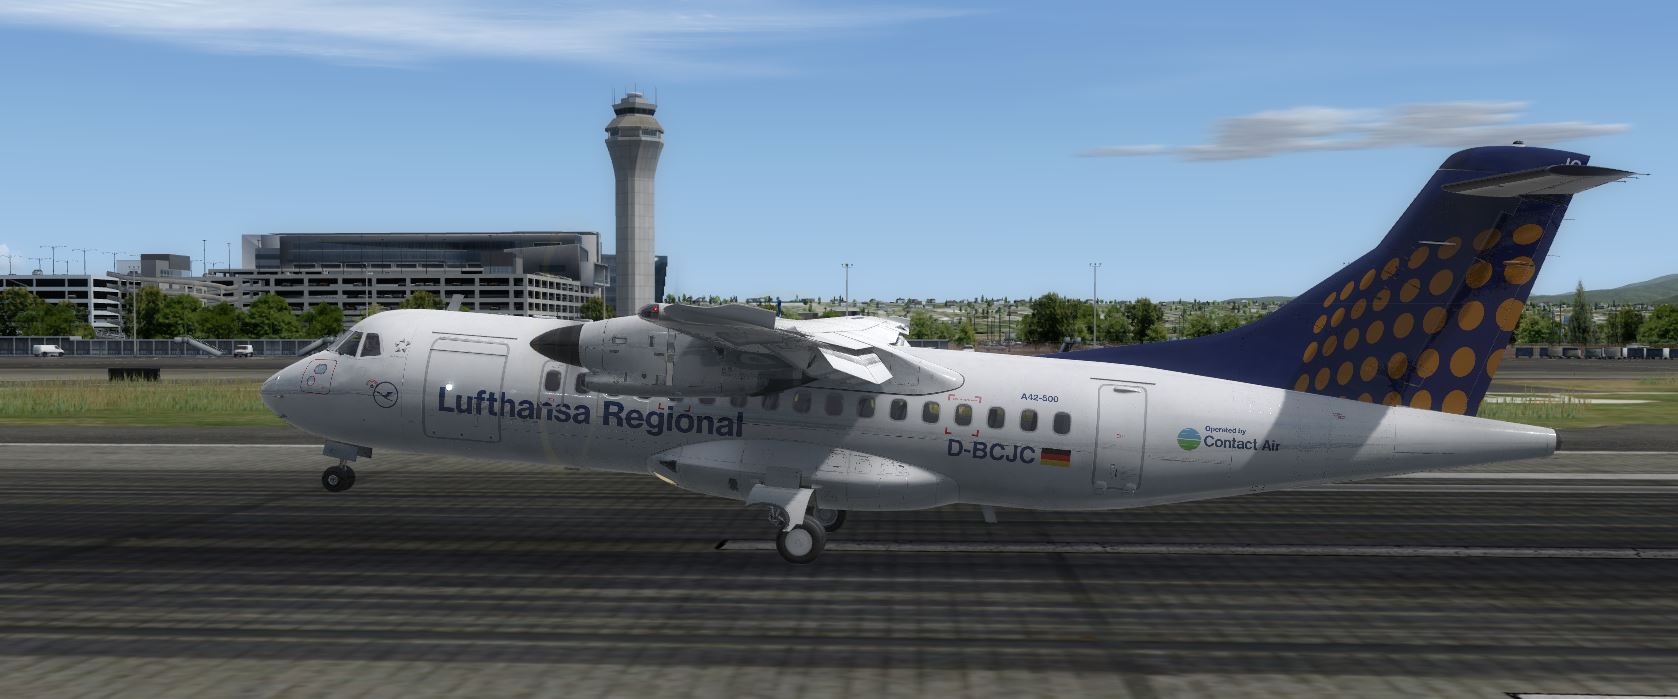 ATR42-500 Lufthansa-9420 